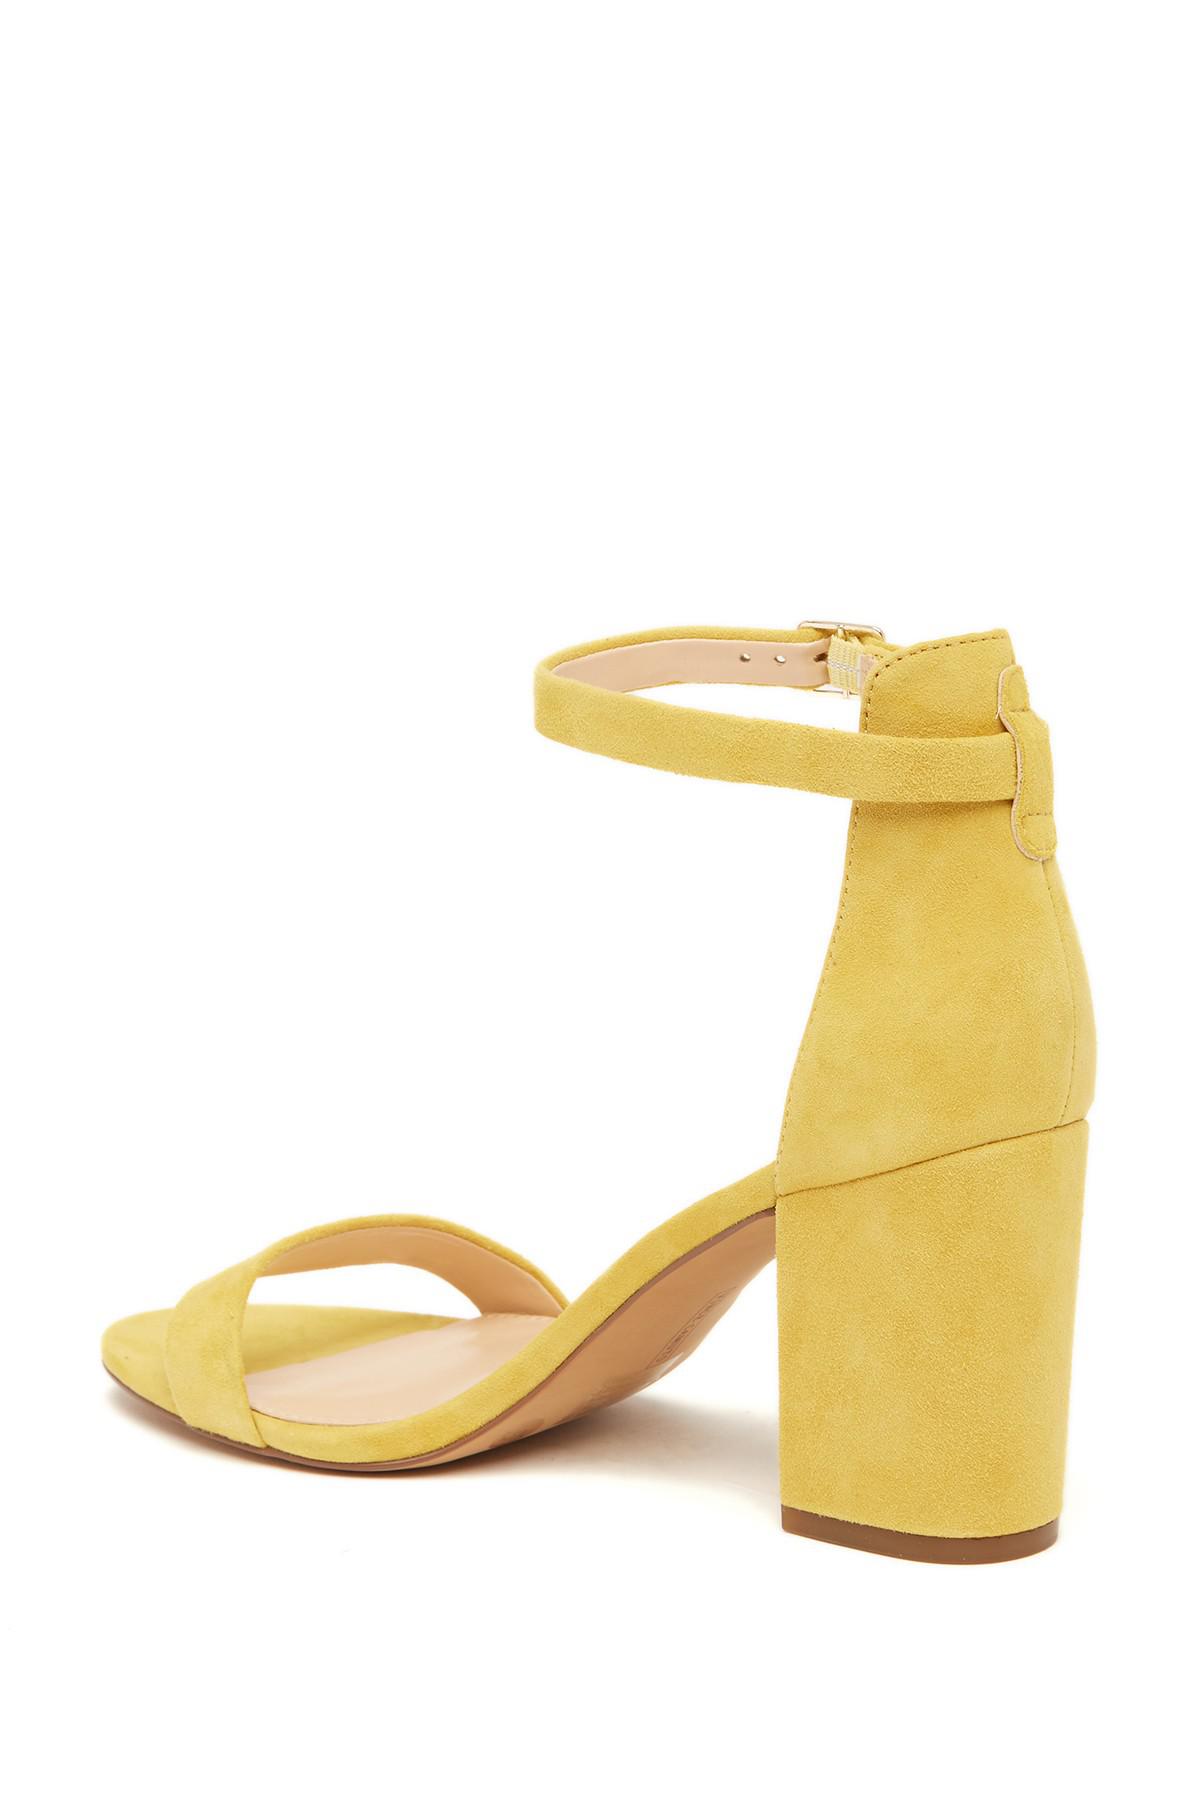 Cute Yellow Suede Block Heels - Yellow Slides - Yellow Sandals - Lulus